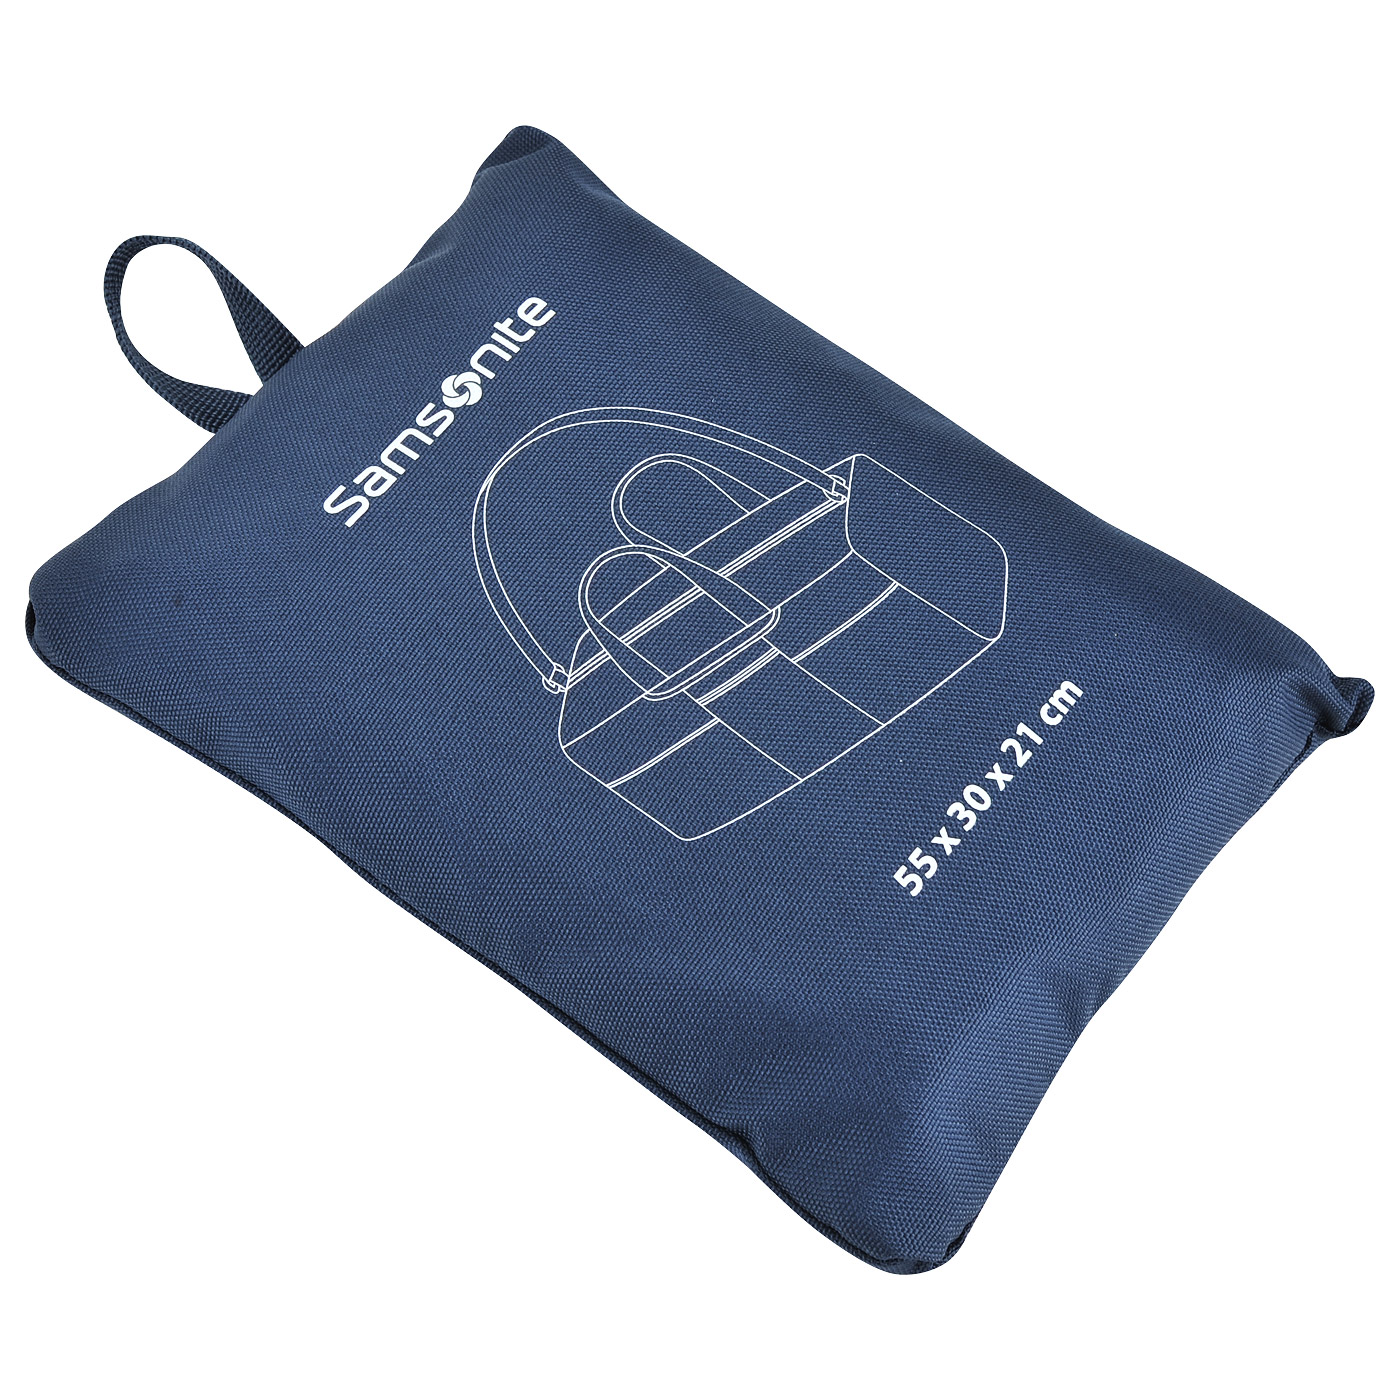 Дорожная сумка с плечевым ремешком Samsonite Packing Accessories